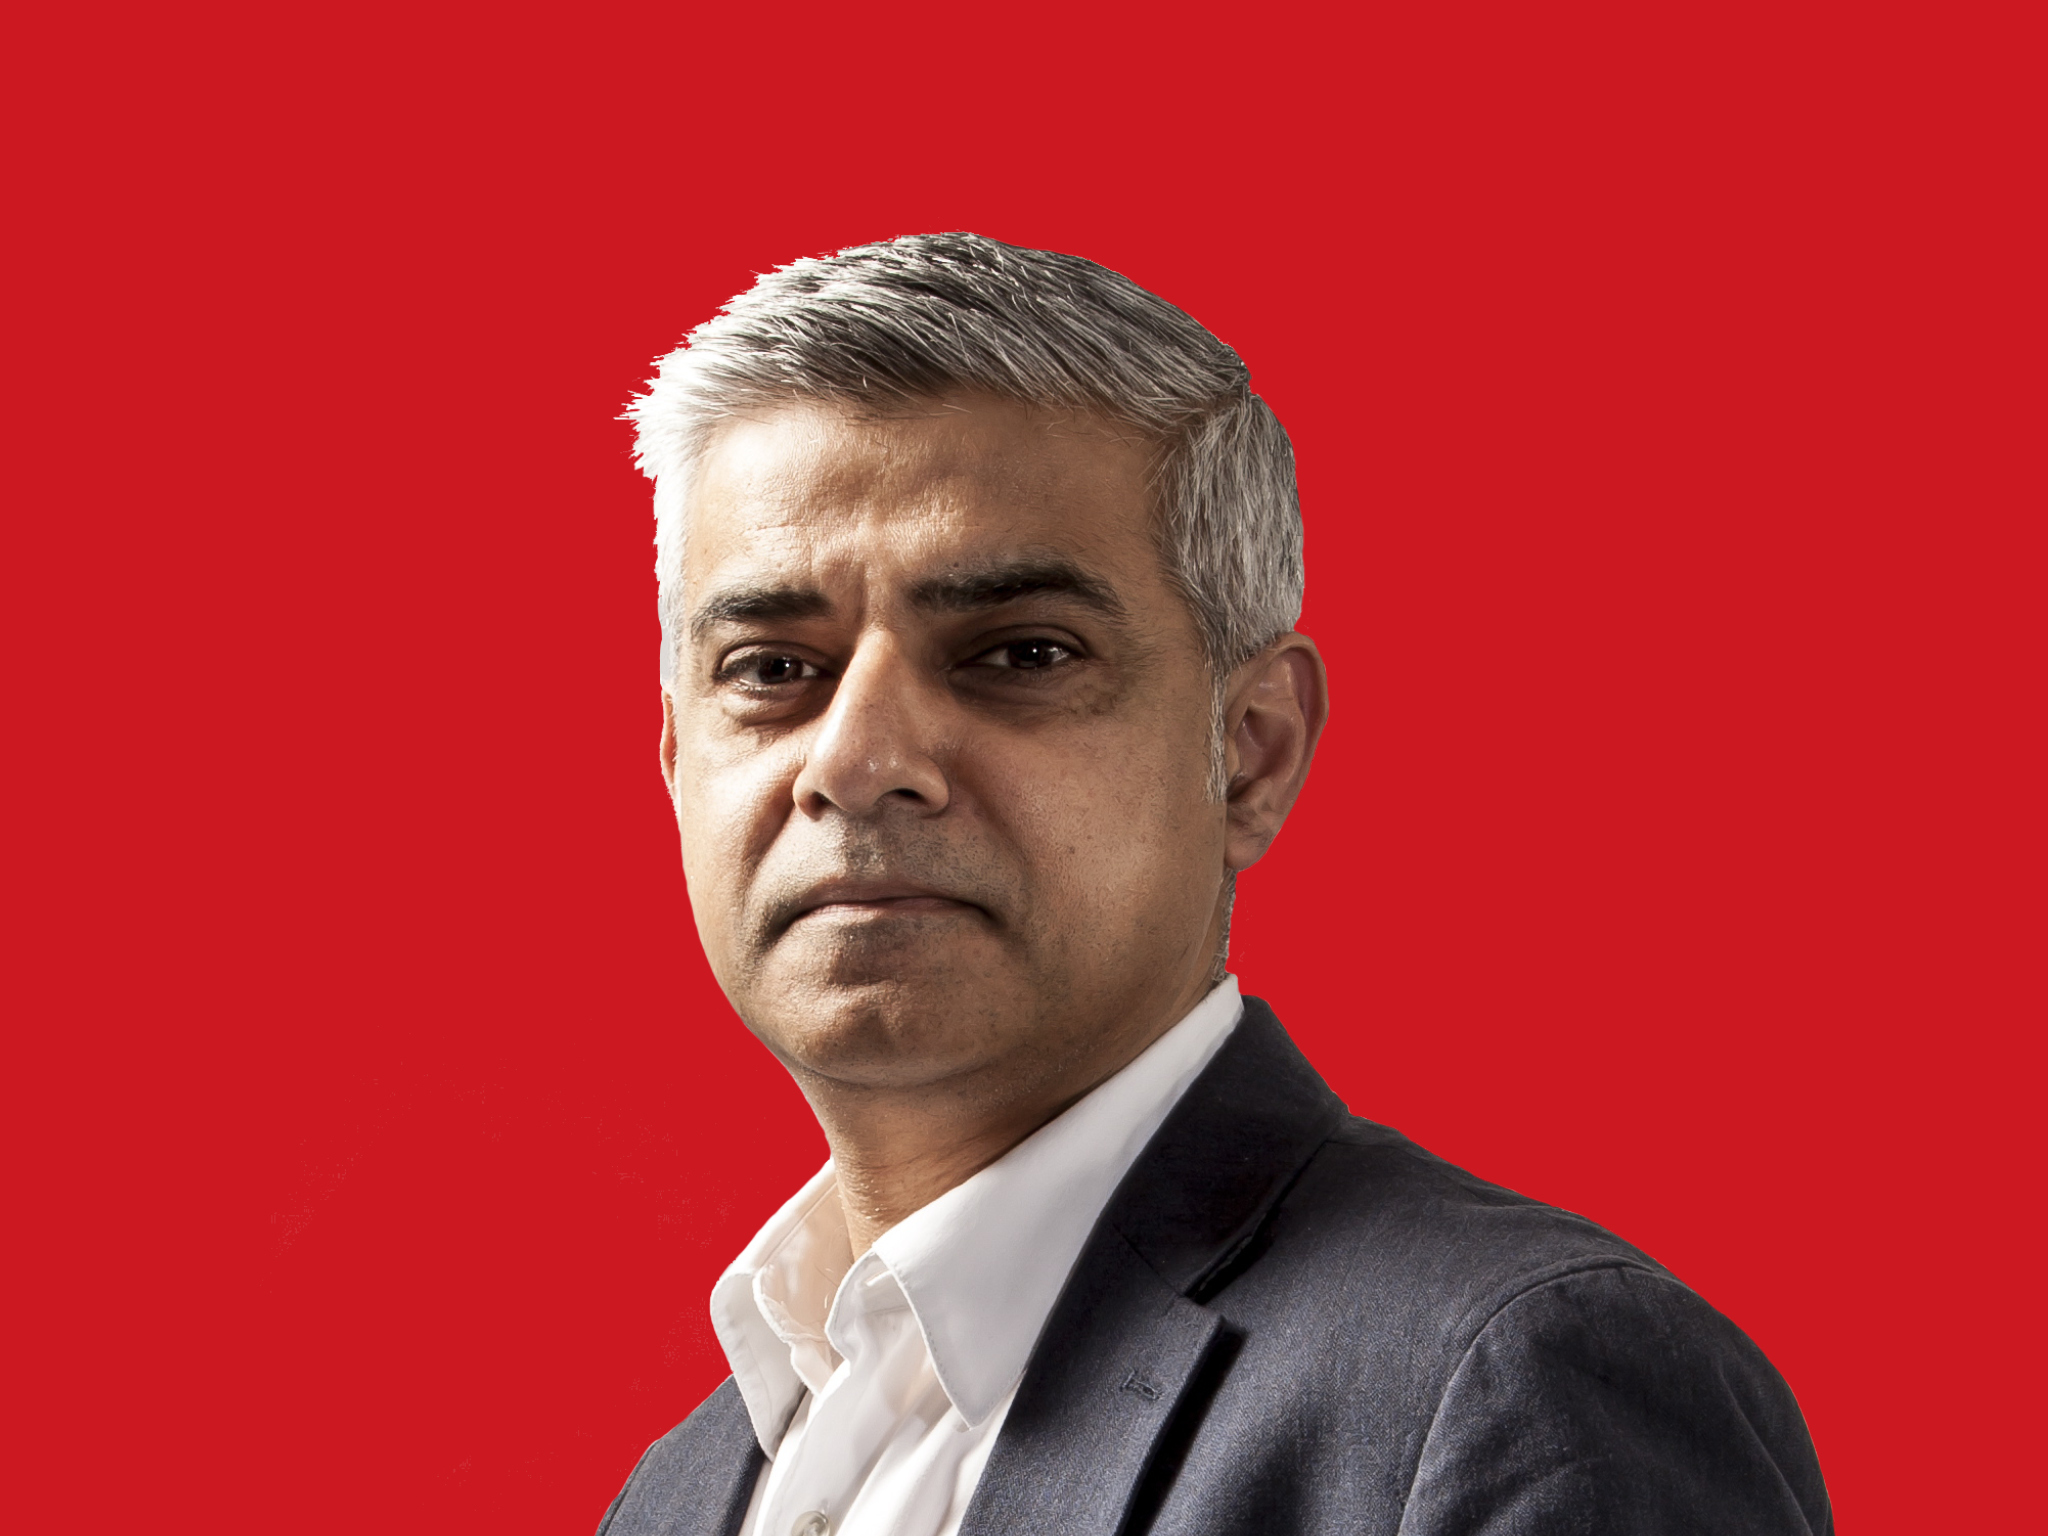 sadiq-khan-is-running-for-a-historic-third-term-as-london-mayor